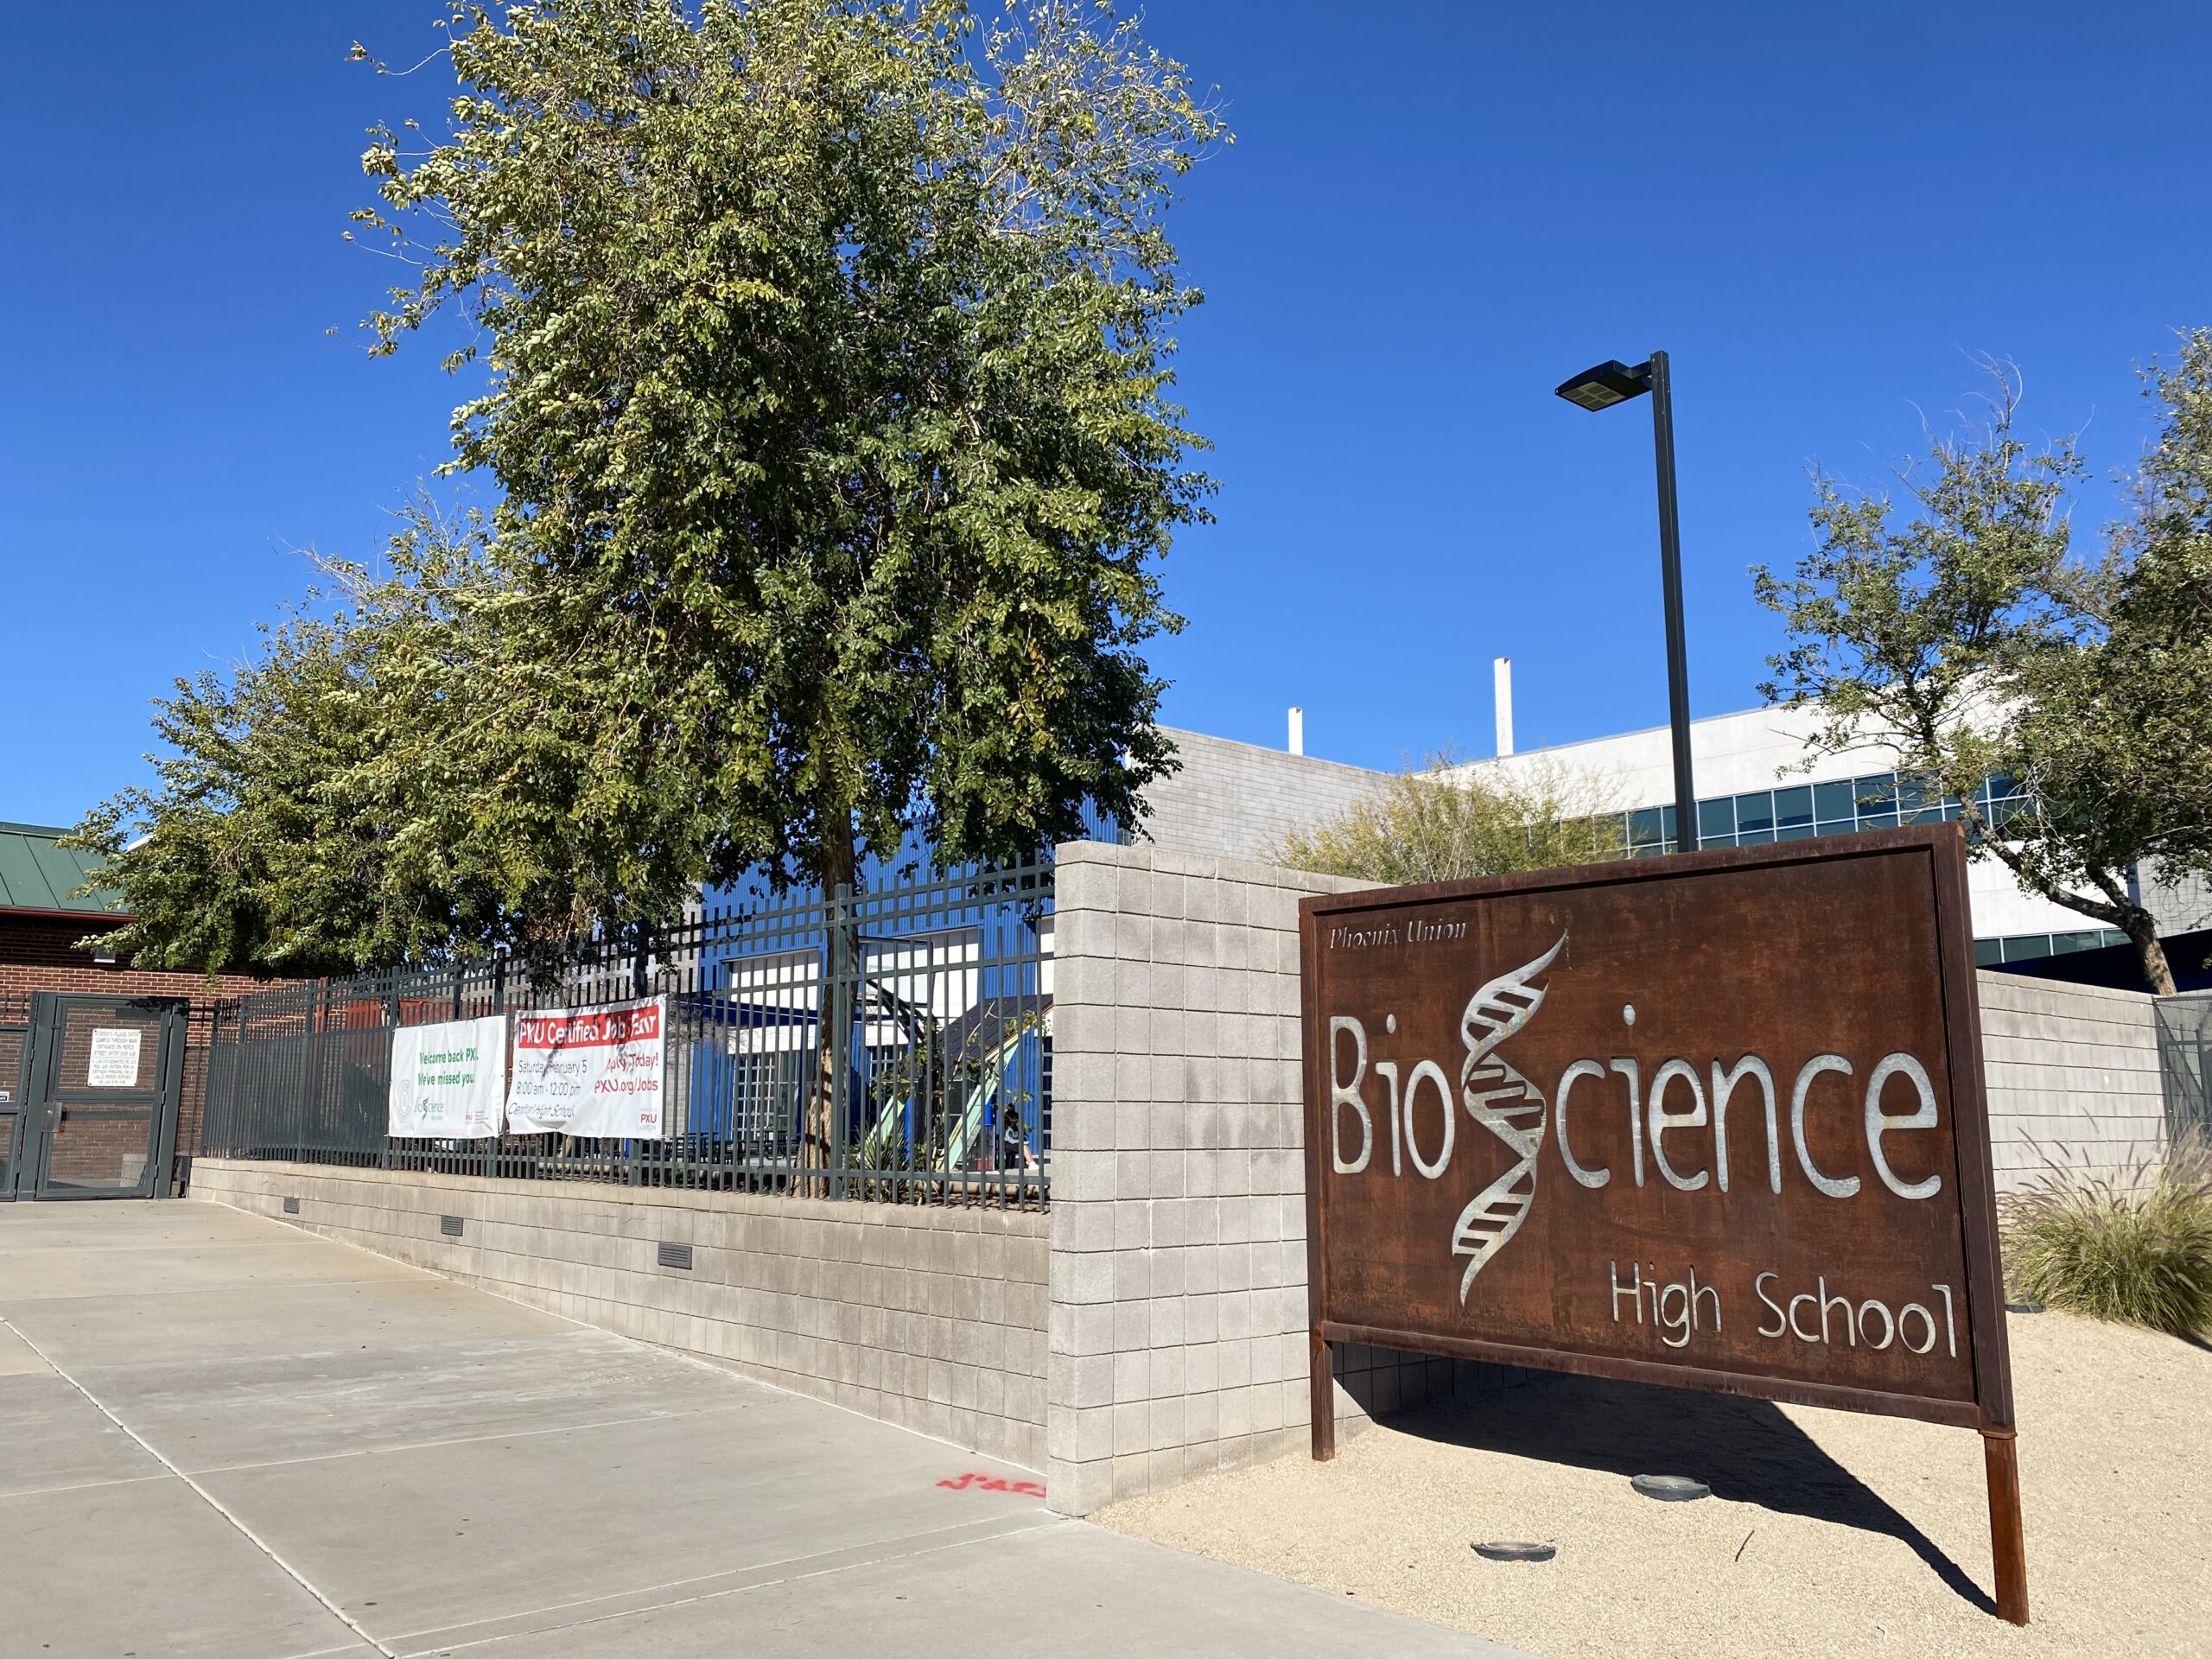 Phoenix Union Bioscience High School receives top grade from Arizona Department of Education